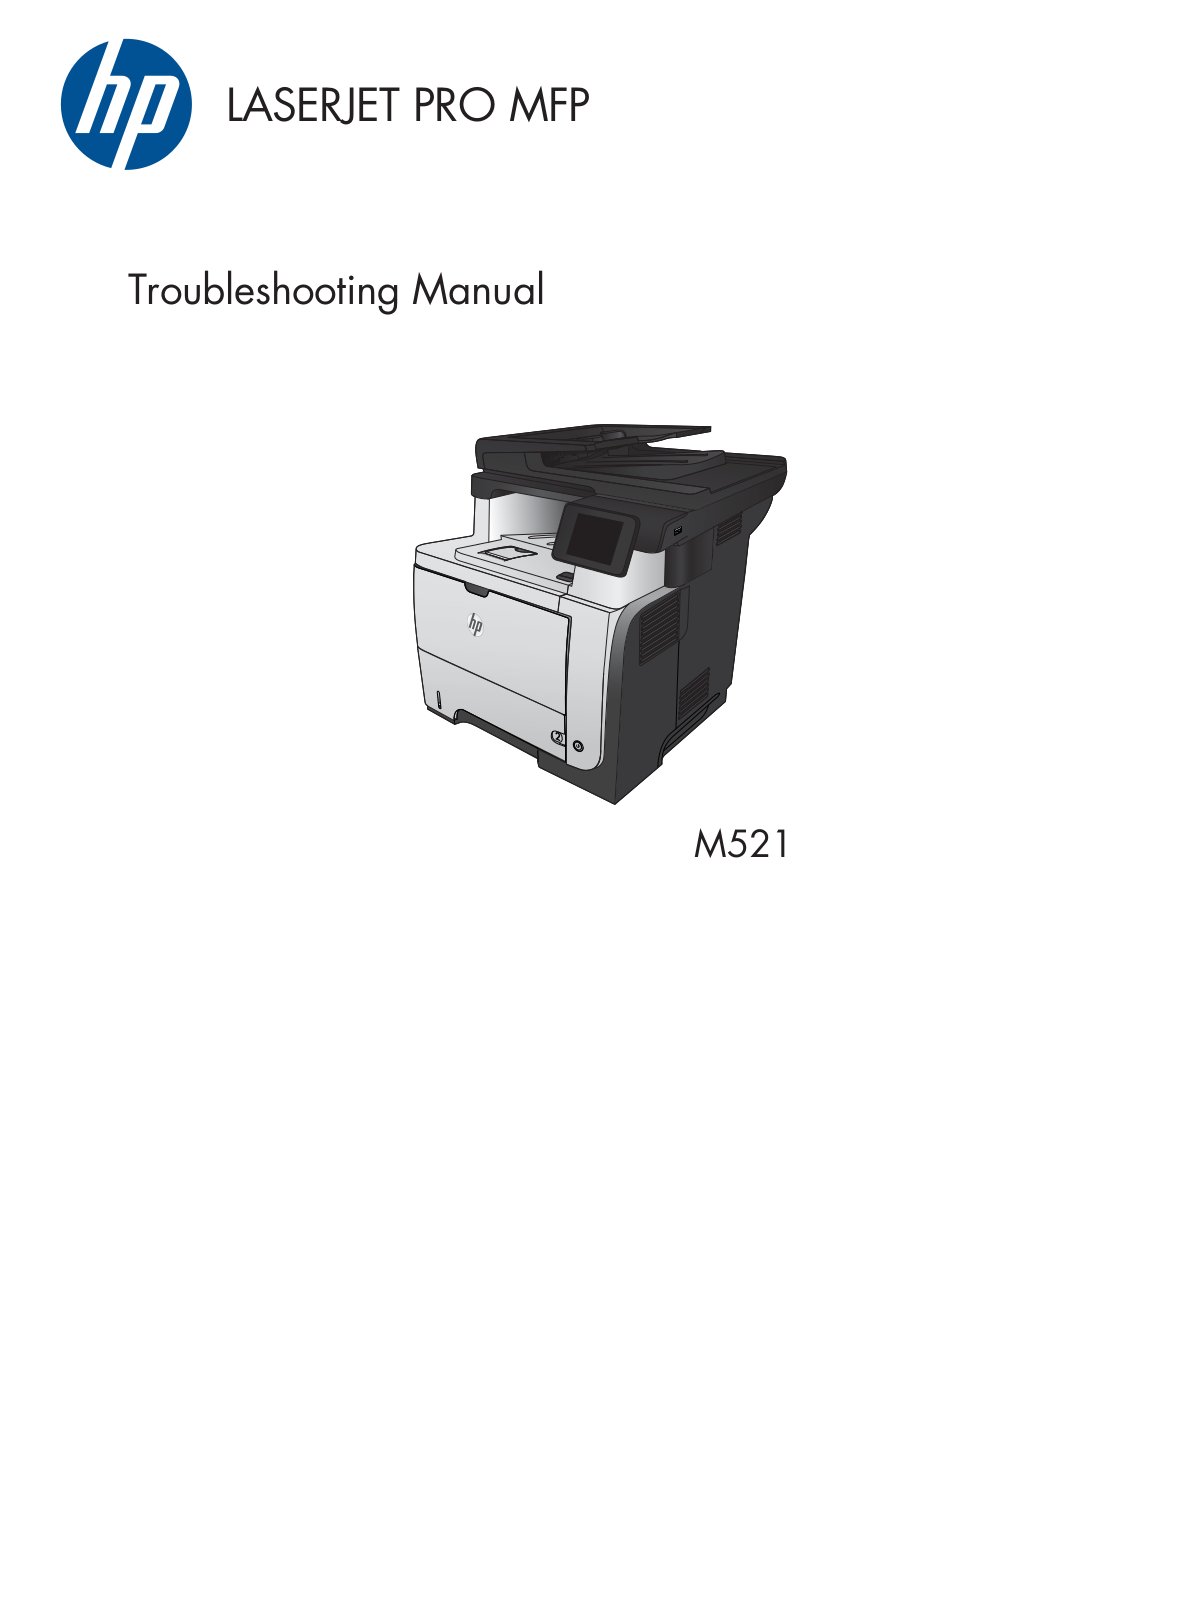 HP LaserJet Pro MFP M521 Troubleshooting Manual